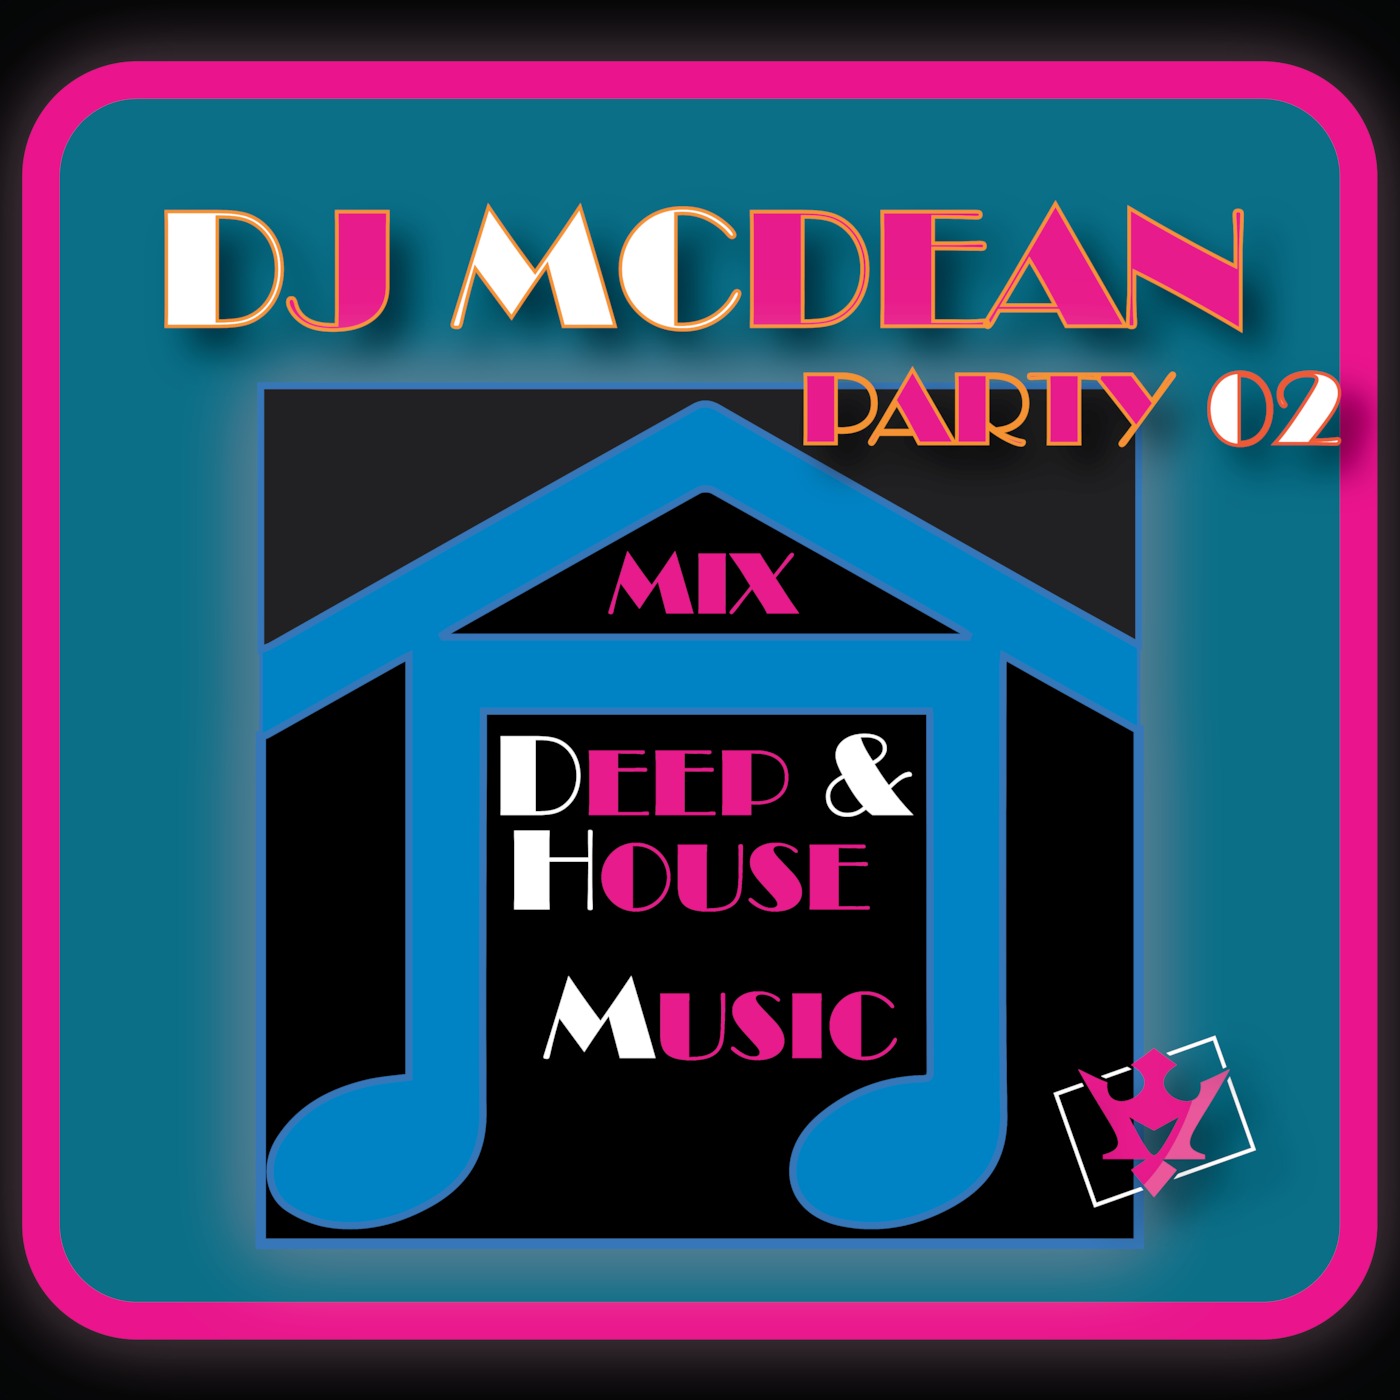 Dj MCDEAN - Mix Deep & House Music Party 02